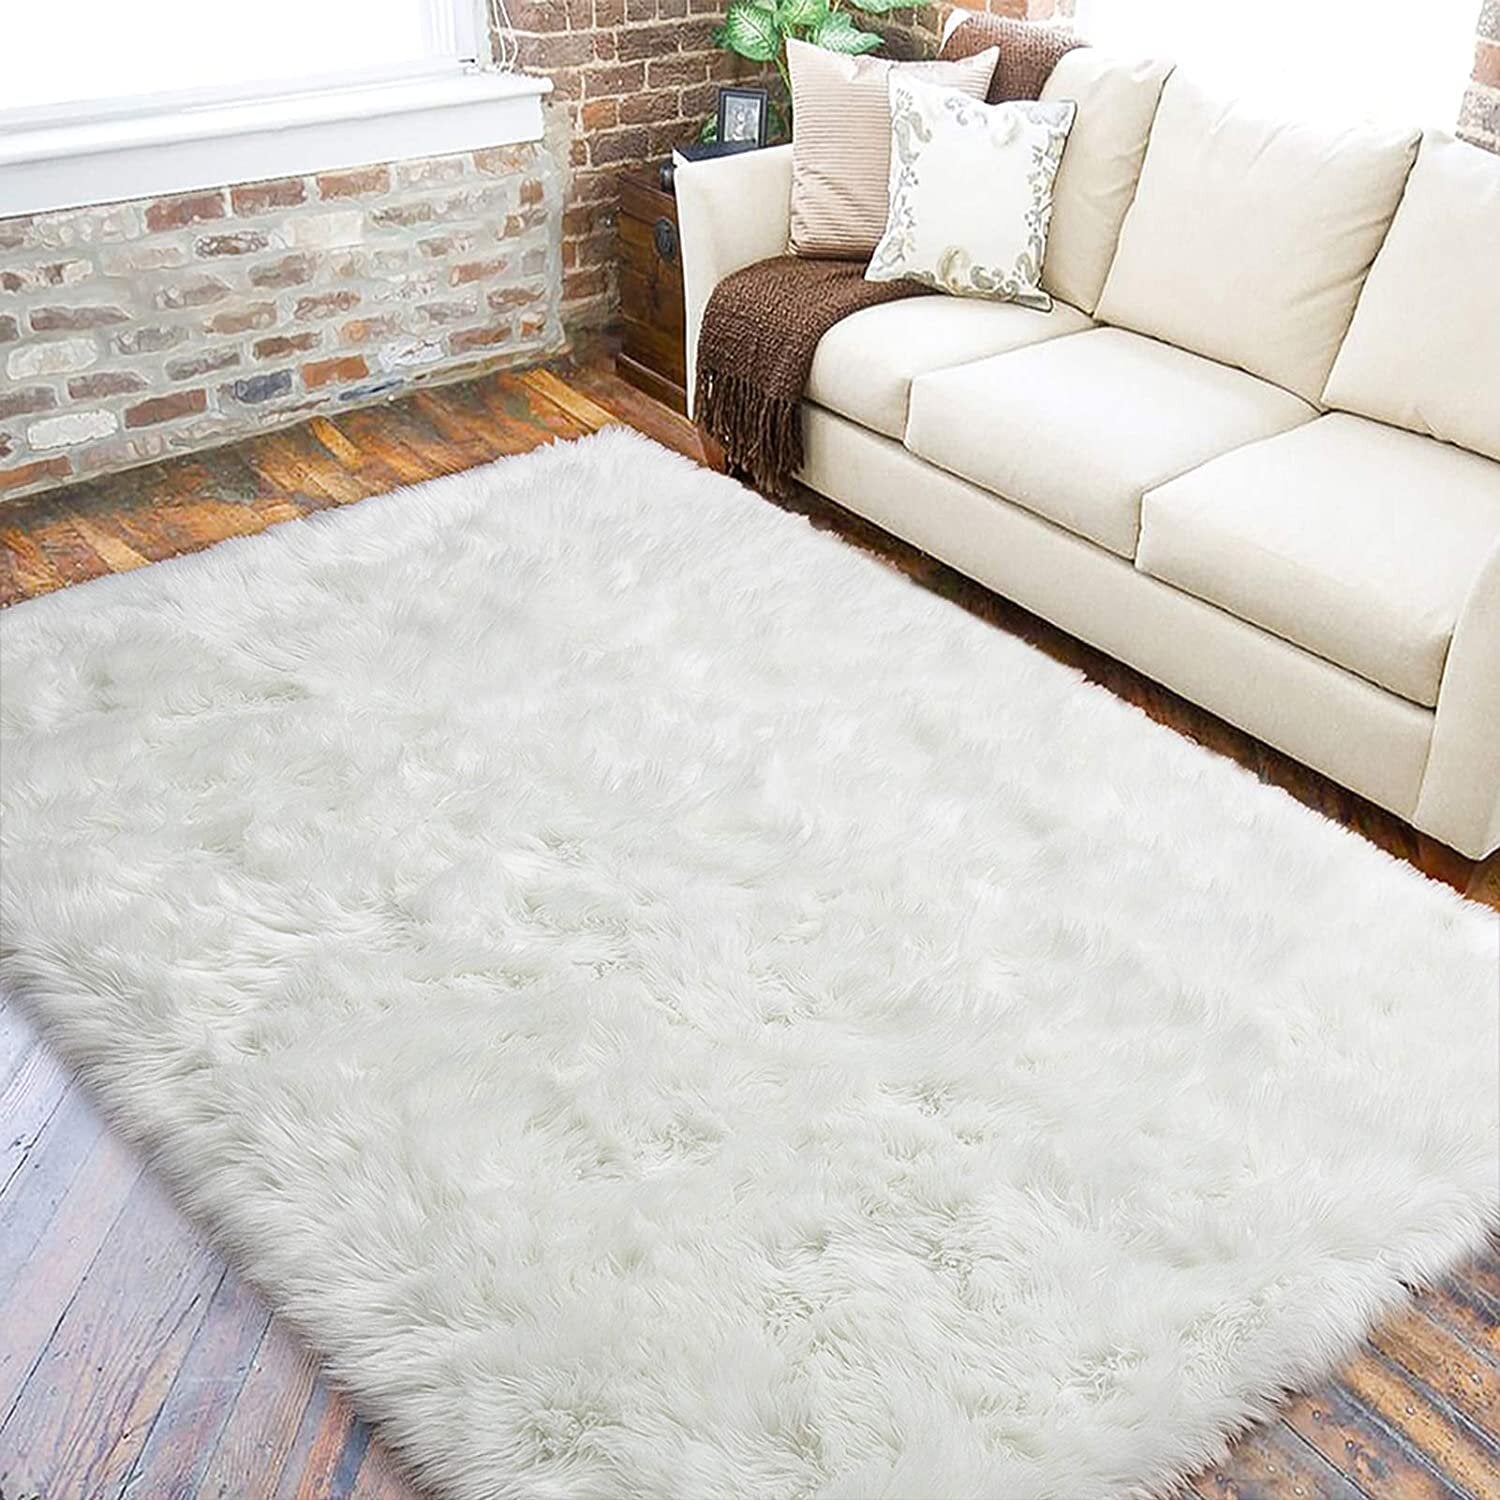 Why choose Knitfirst sheepskin rugs?